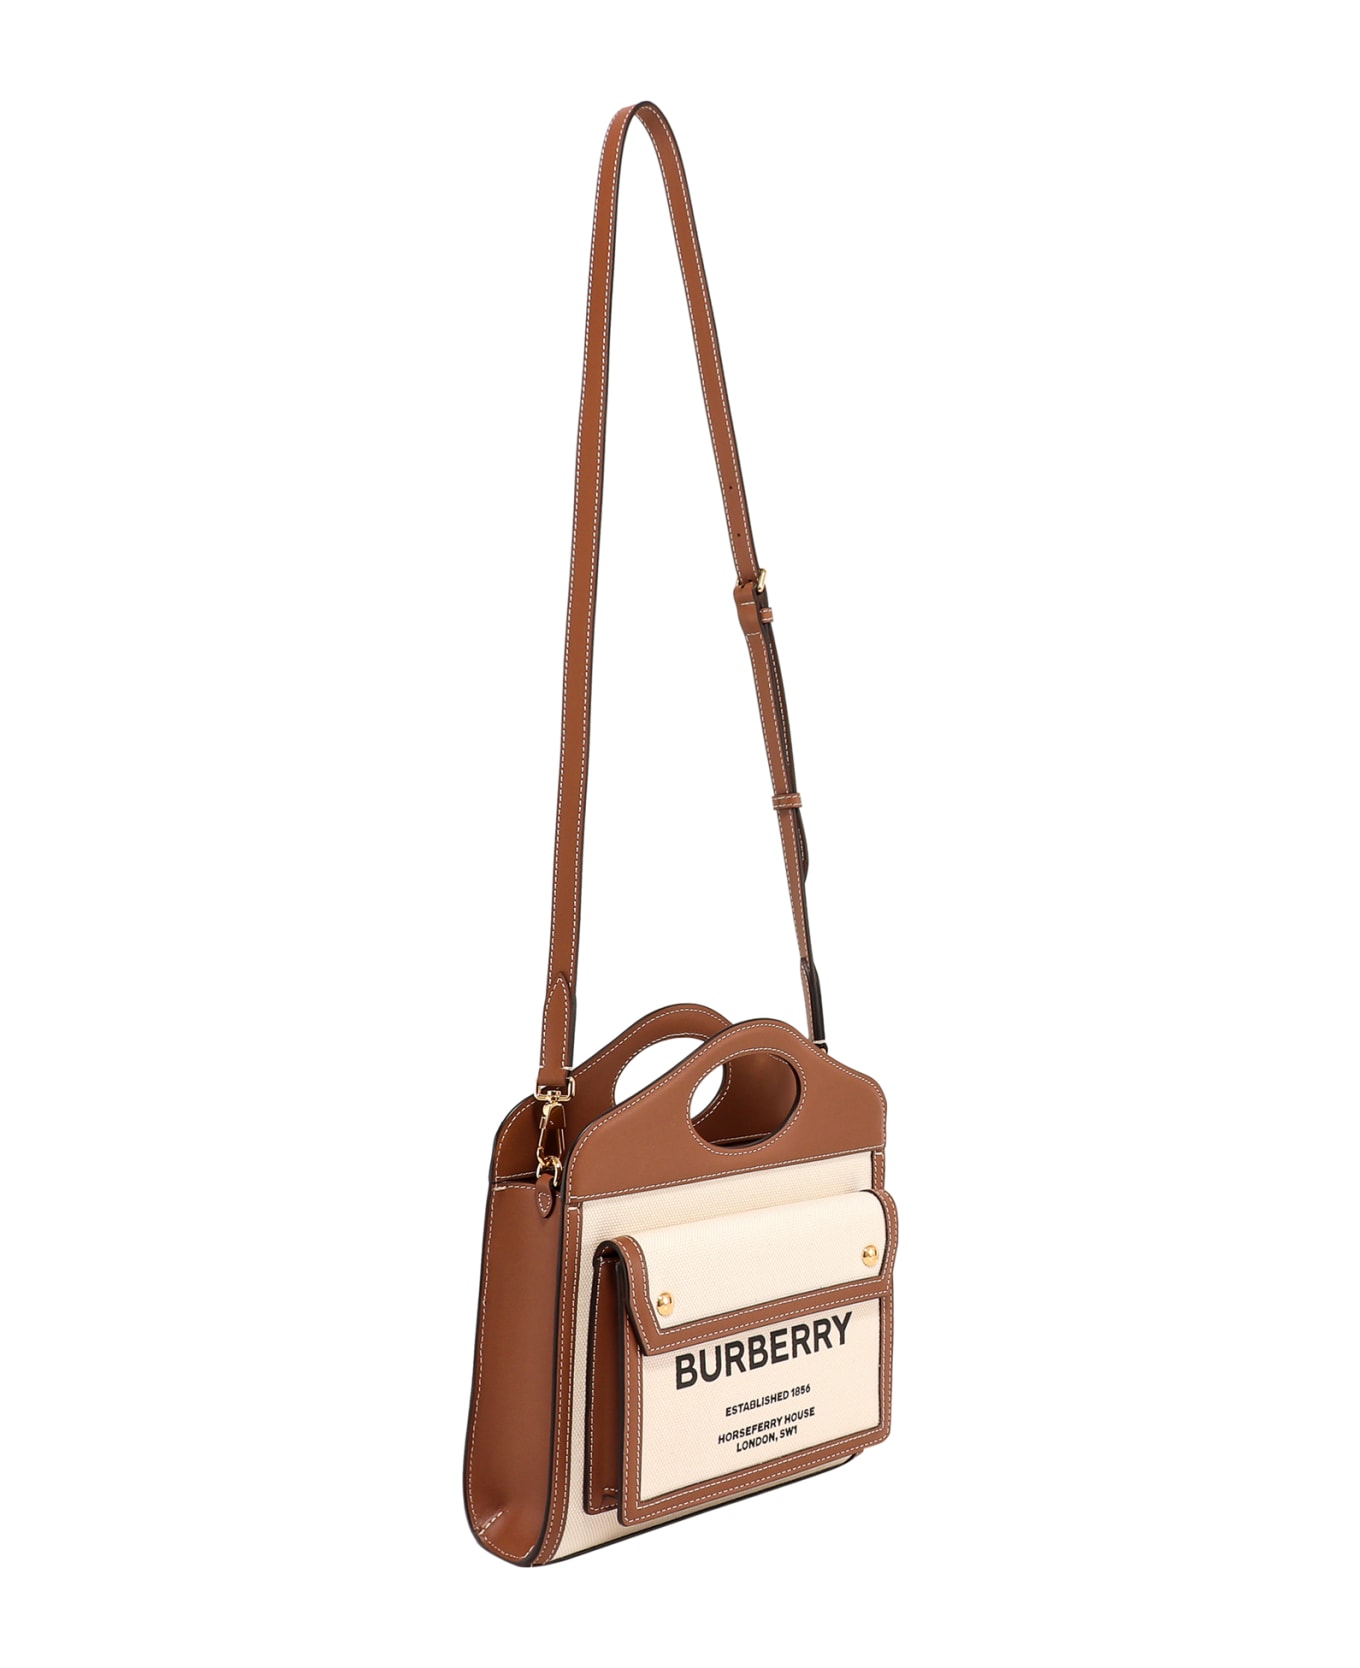 Burberry Pocket Handbag - Natural/malt brown